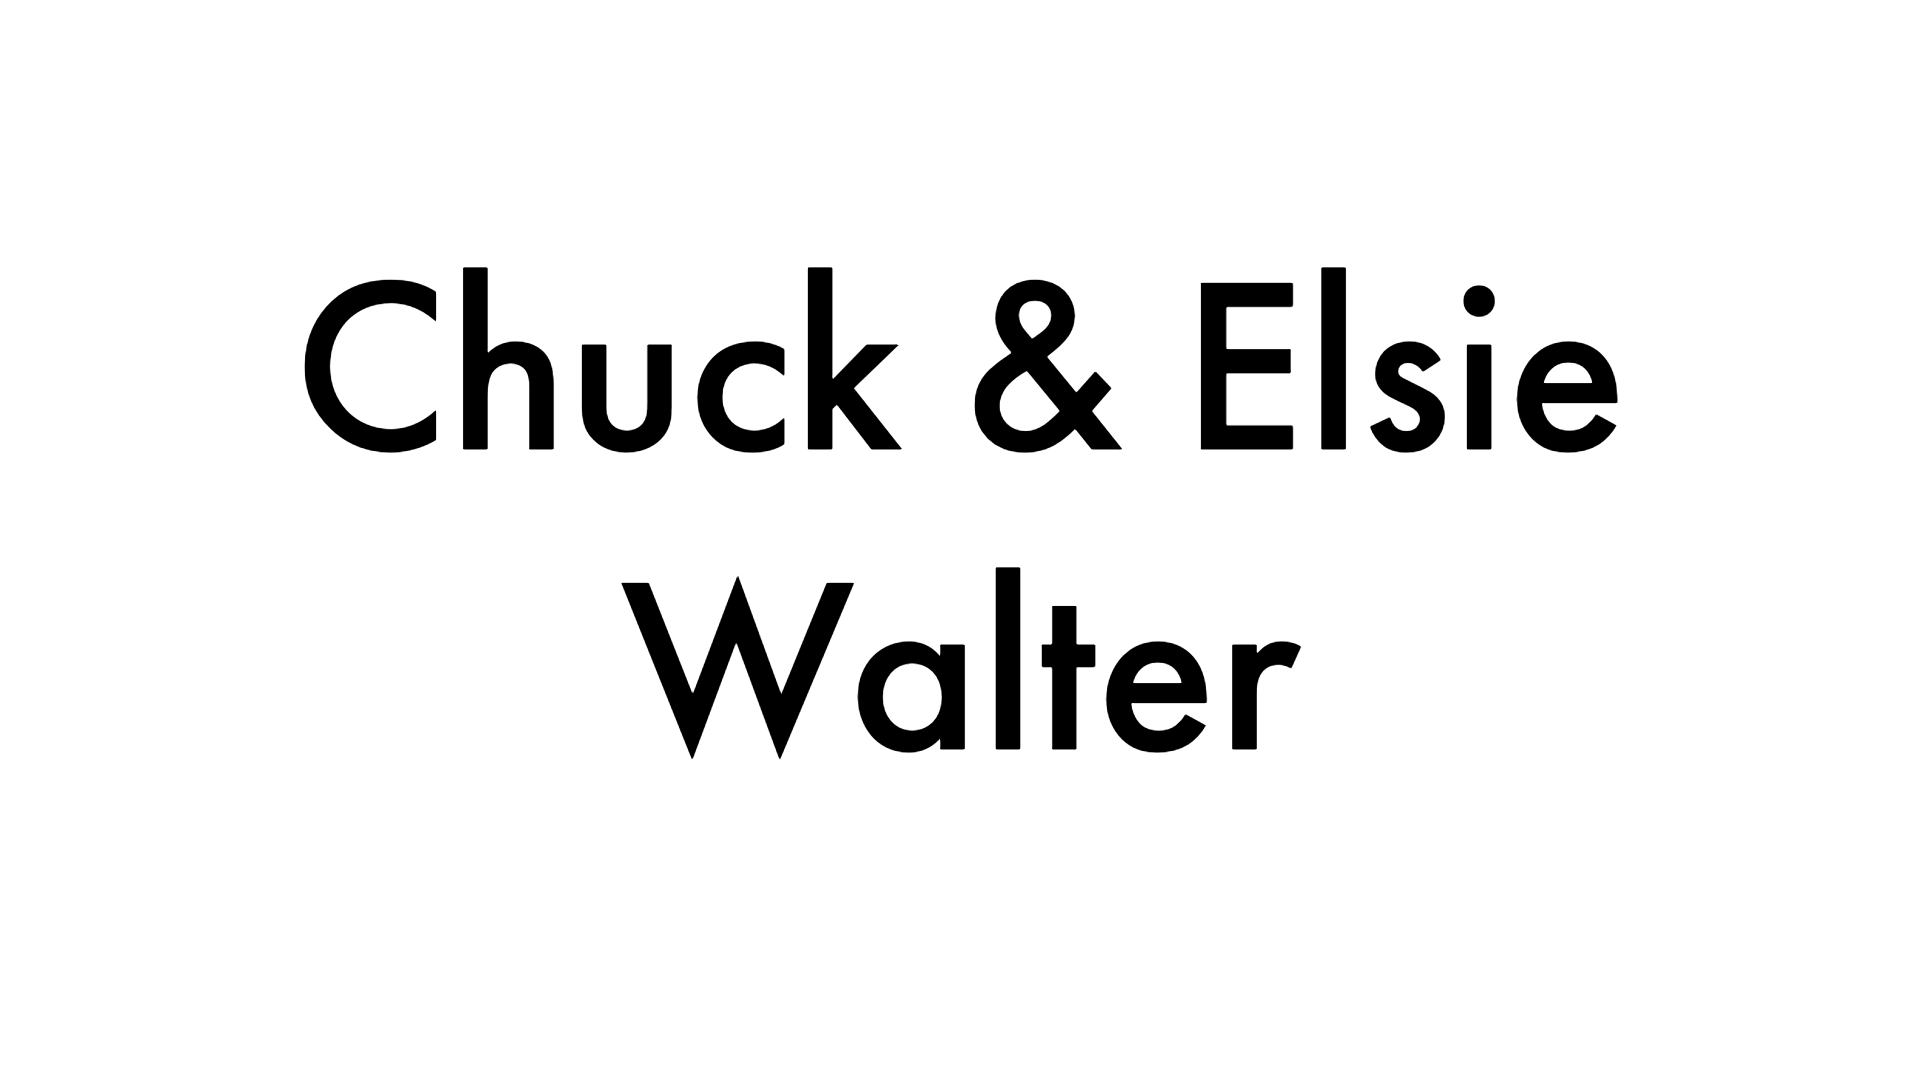 Chuck & Elsie Walter